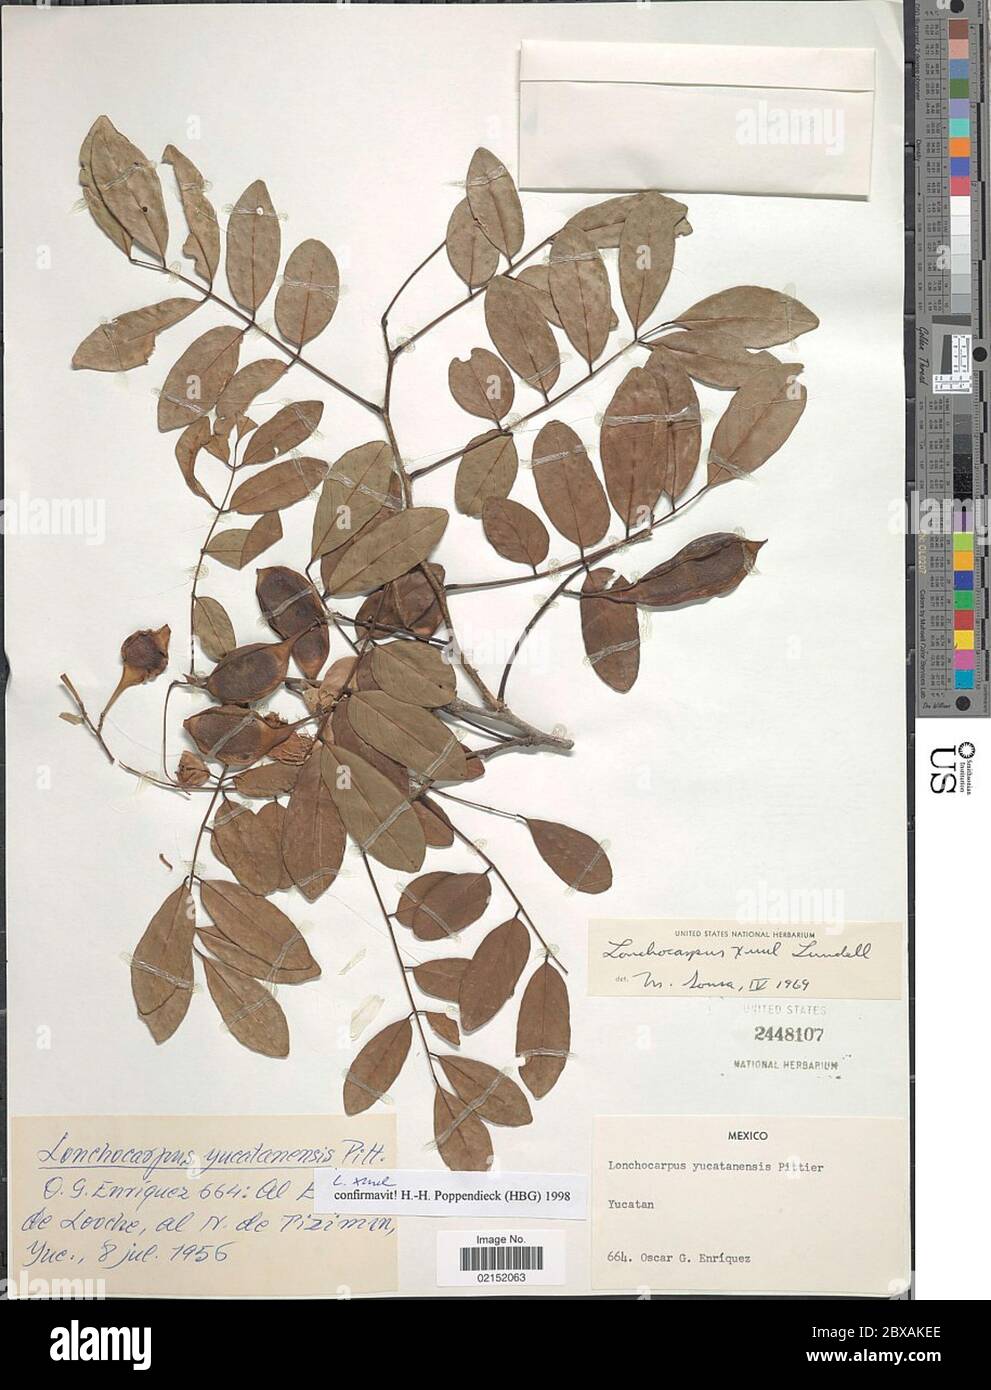 Lonchocarpus xuul Lundell Lonchocarpus xuul Lundell Stock Photo - Alamy